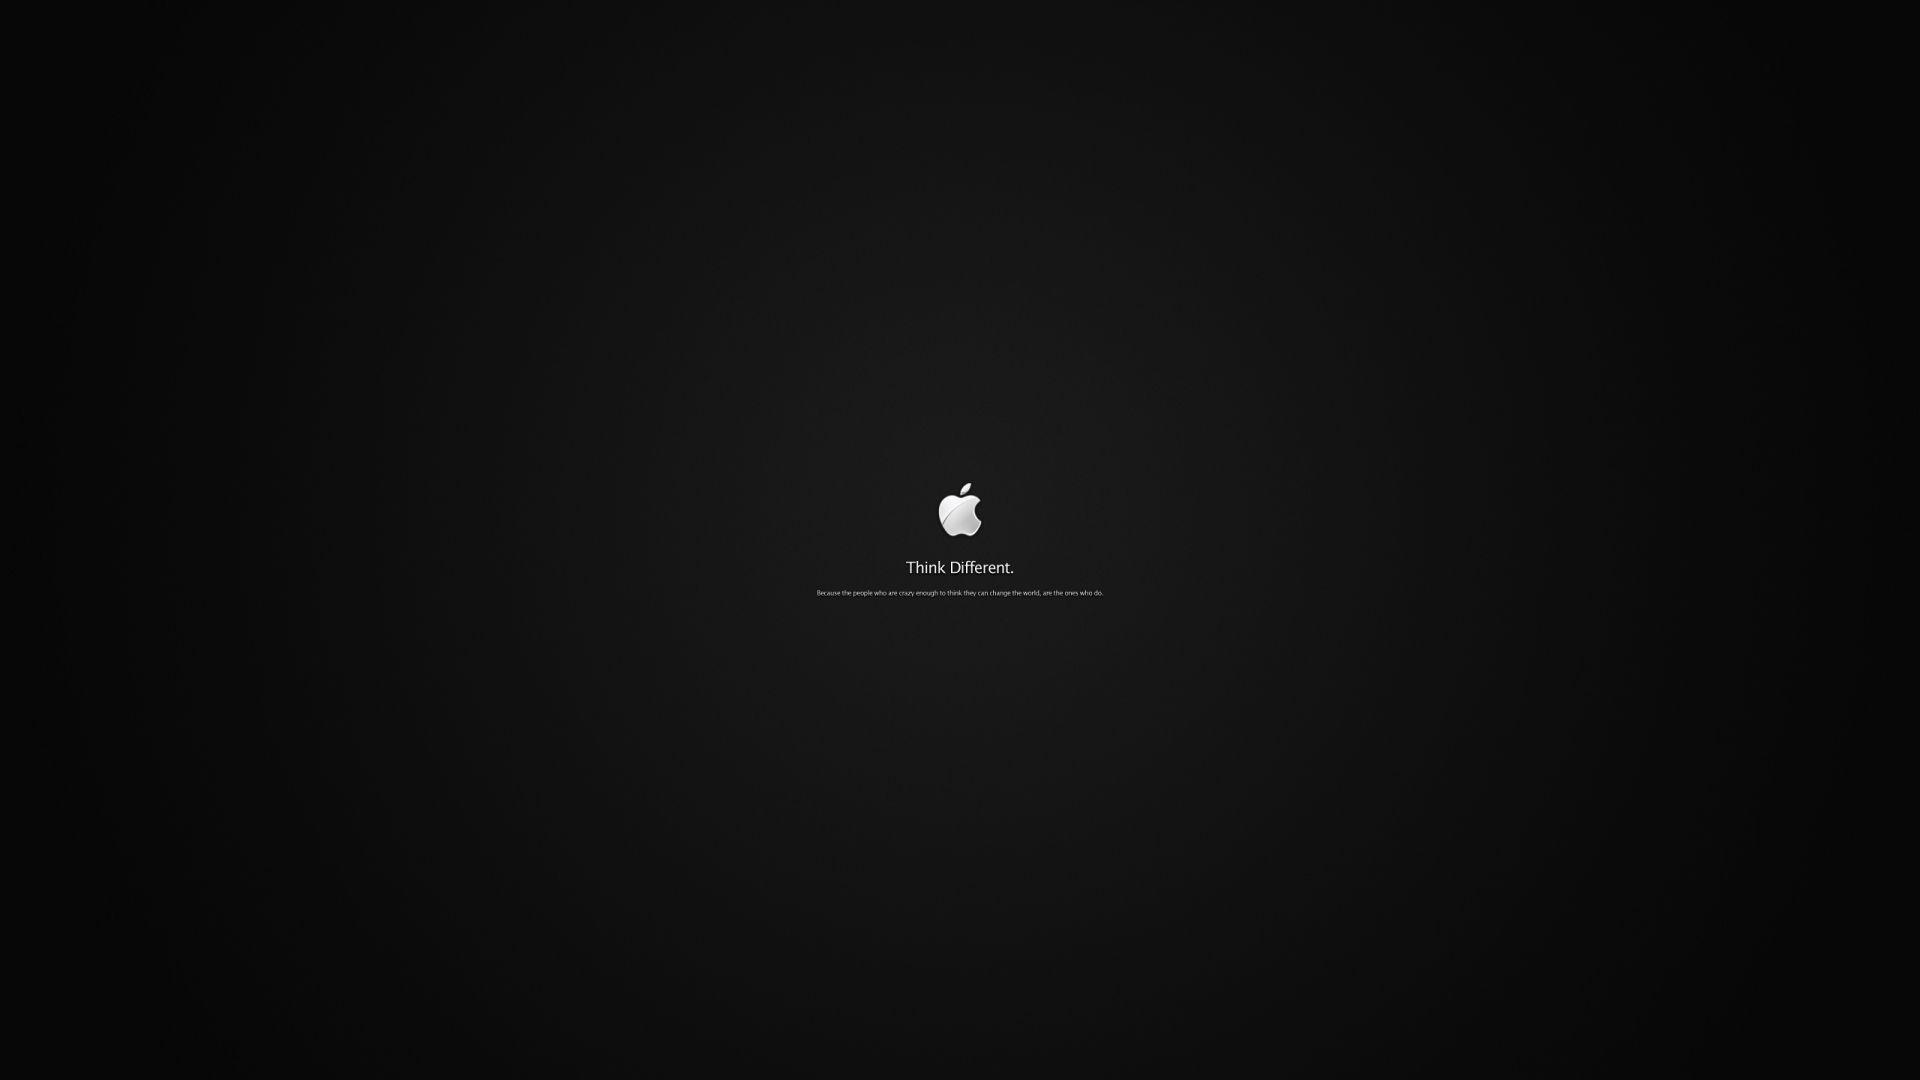 Crazy Apple Logo - Tiny Apple Logo Wallpaper - HD Wallpapers